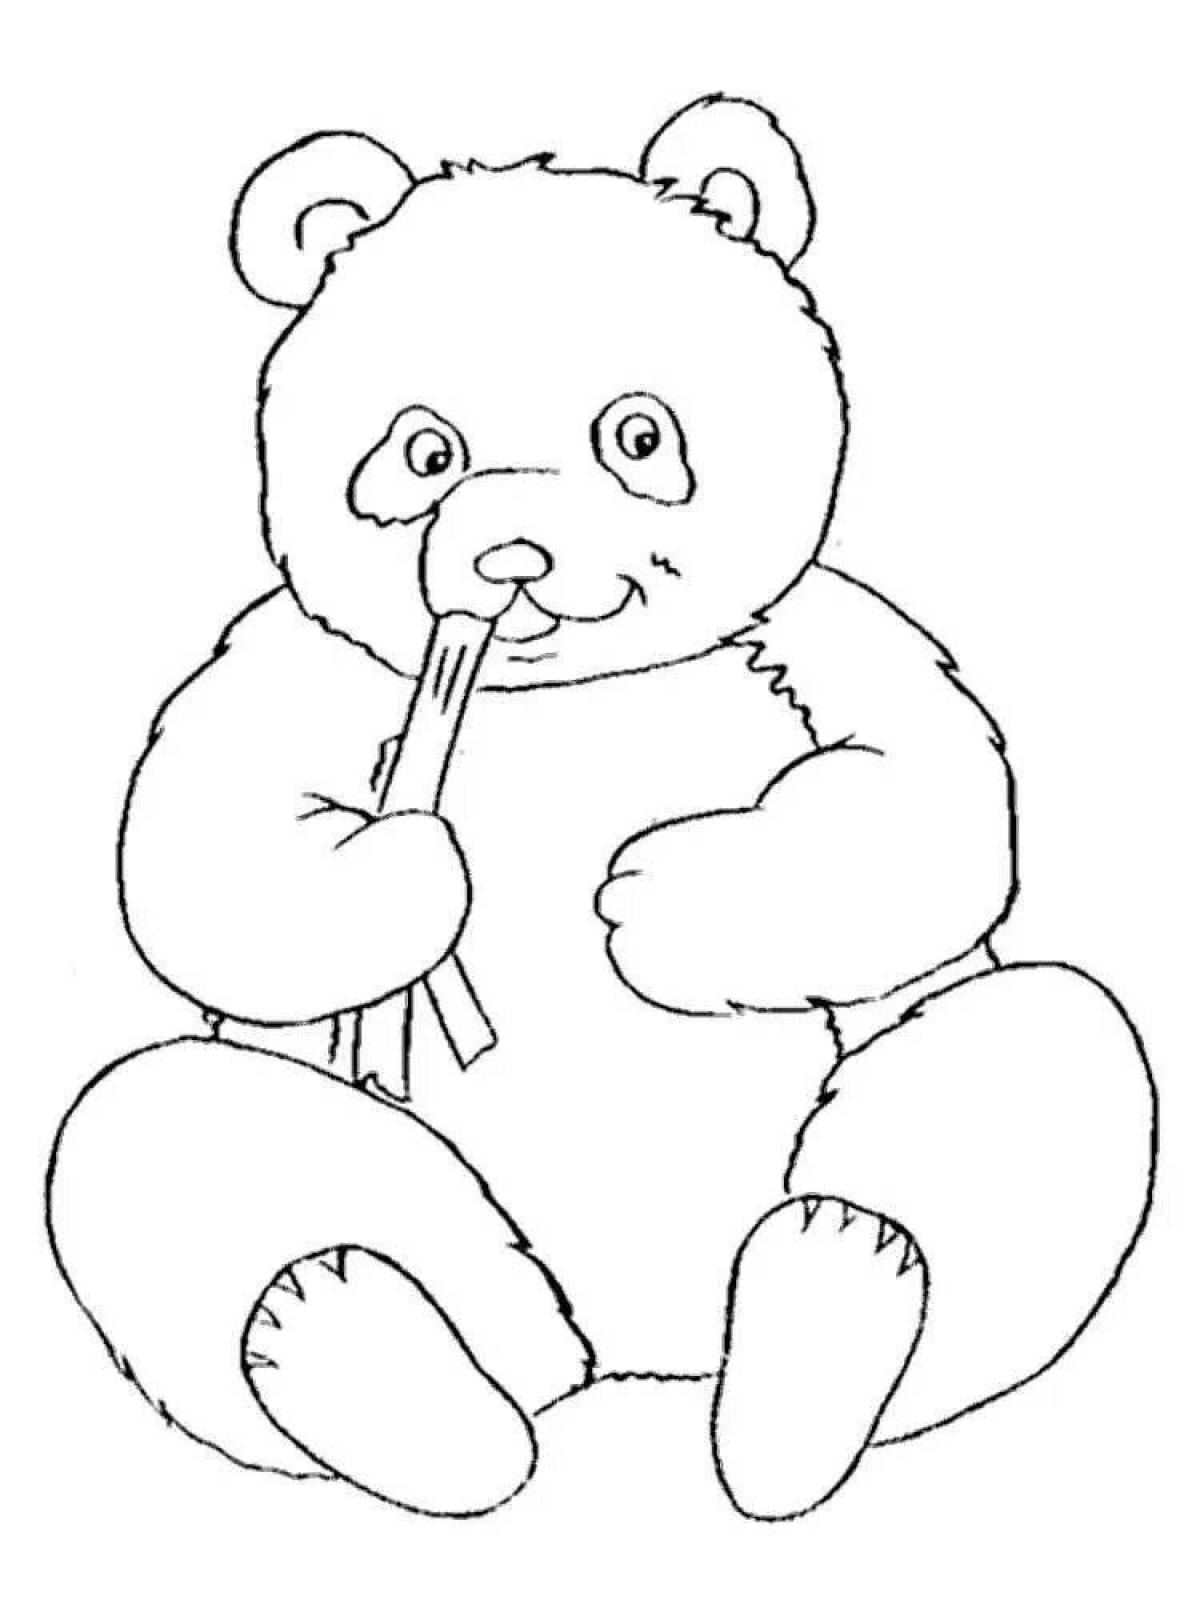 Joyful panda drawing coloring page